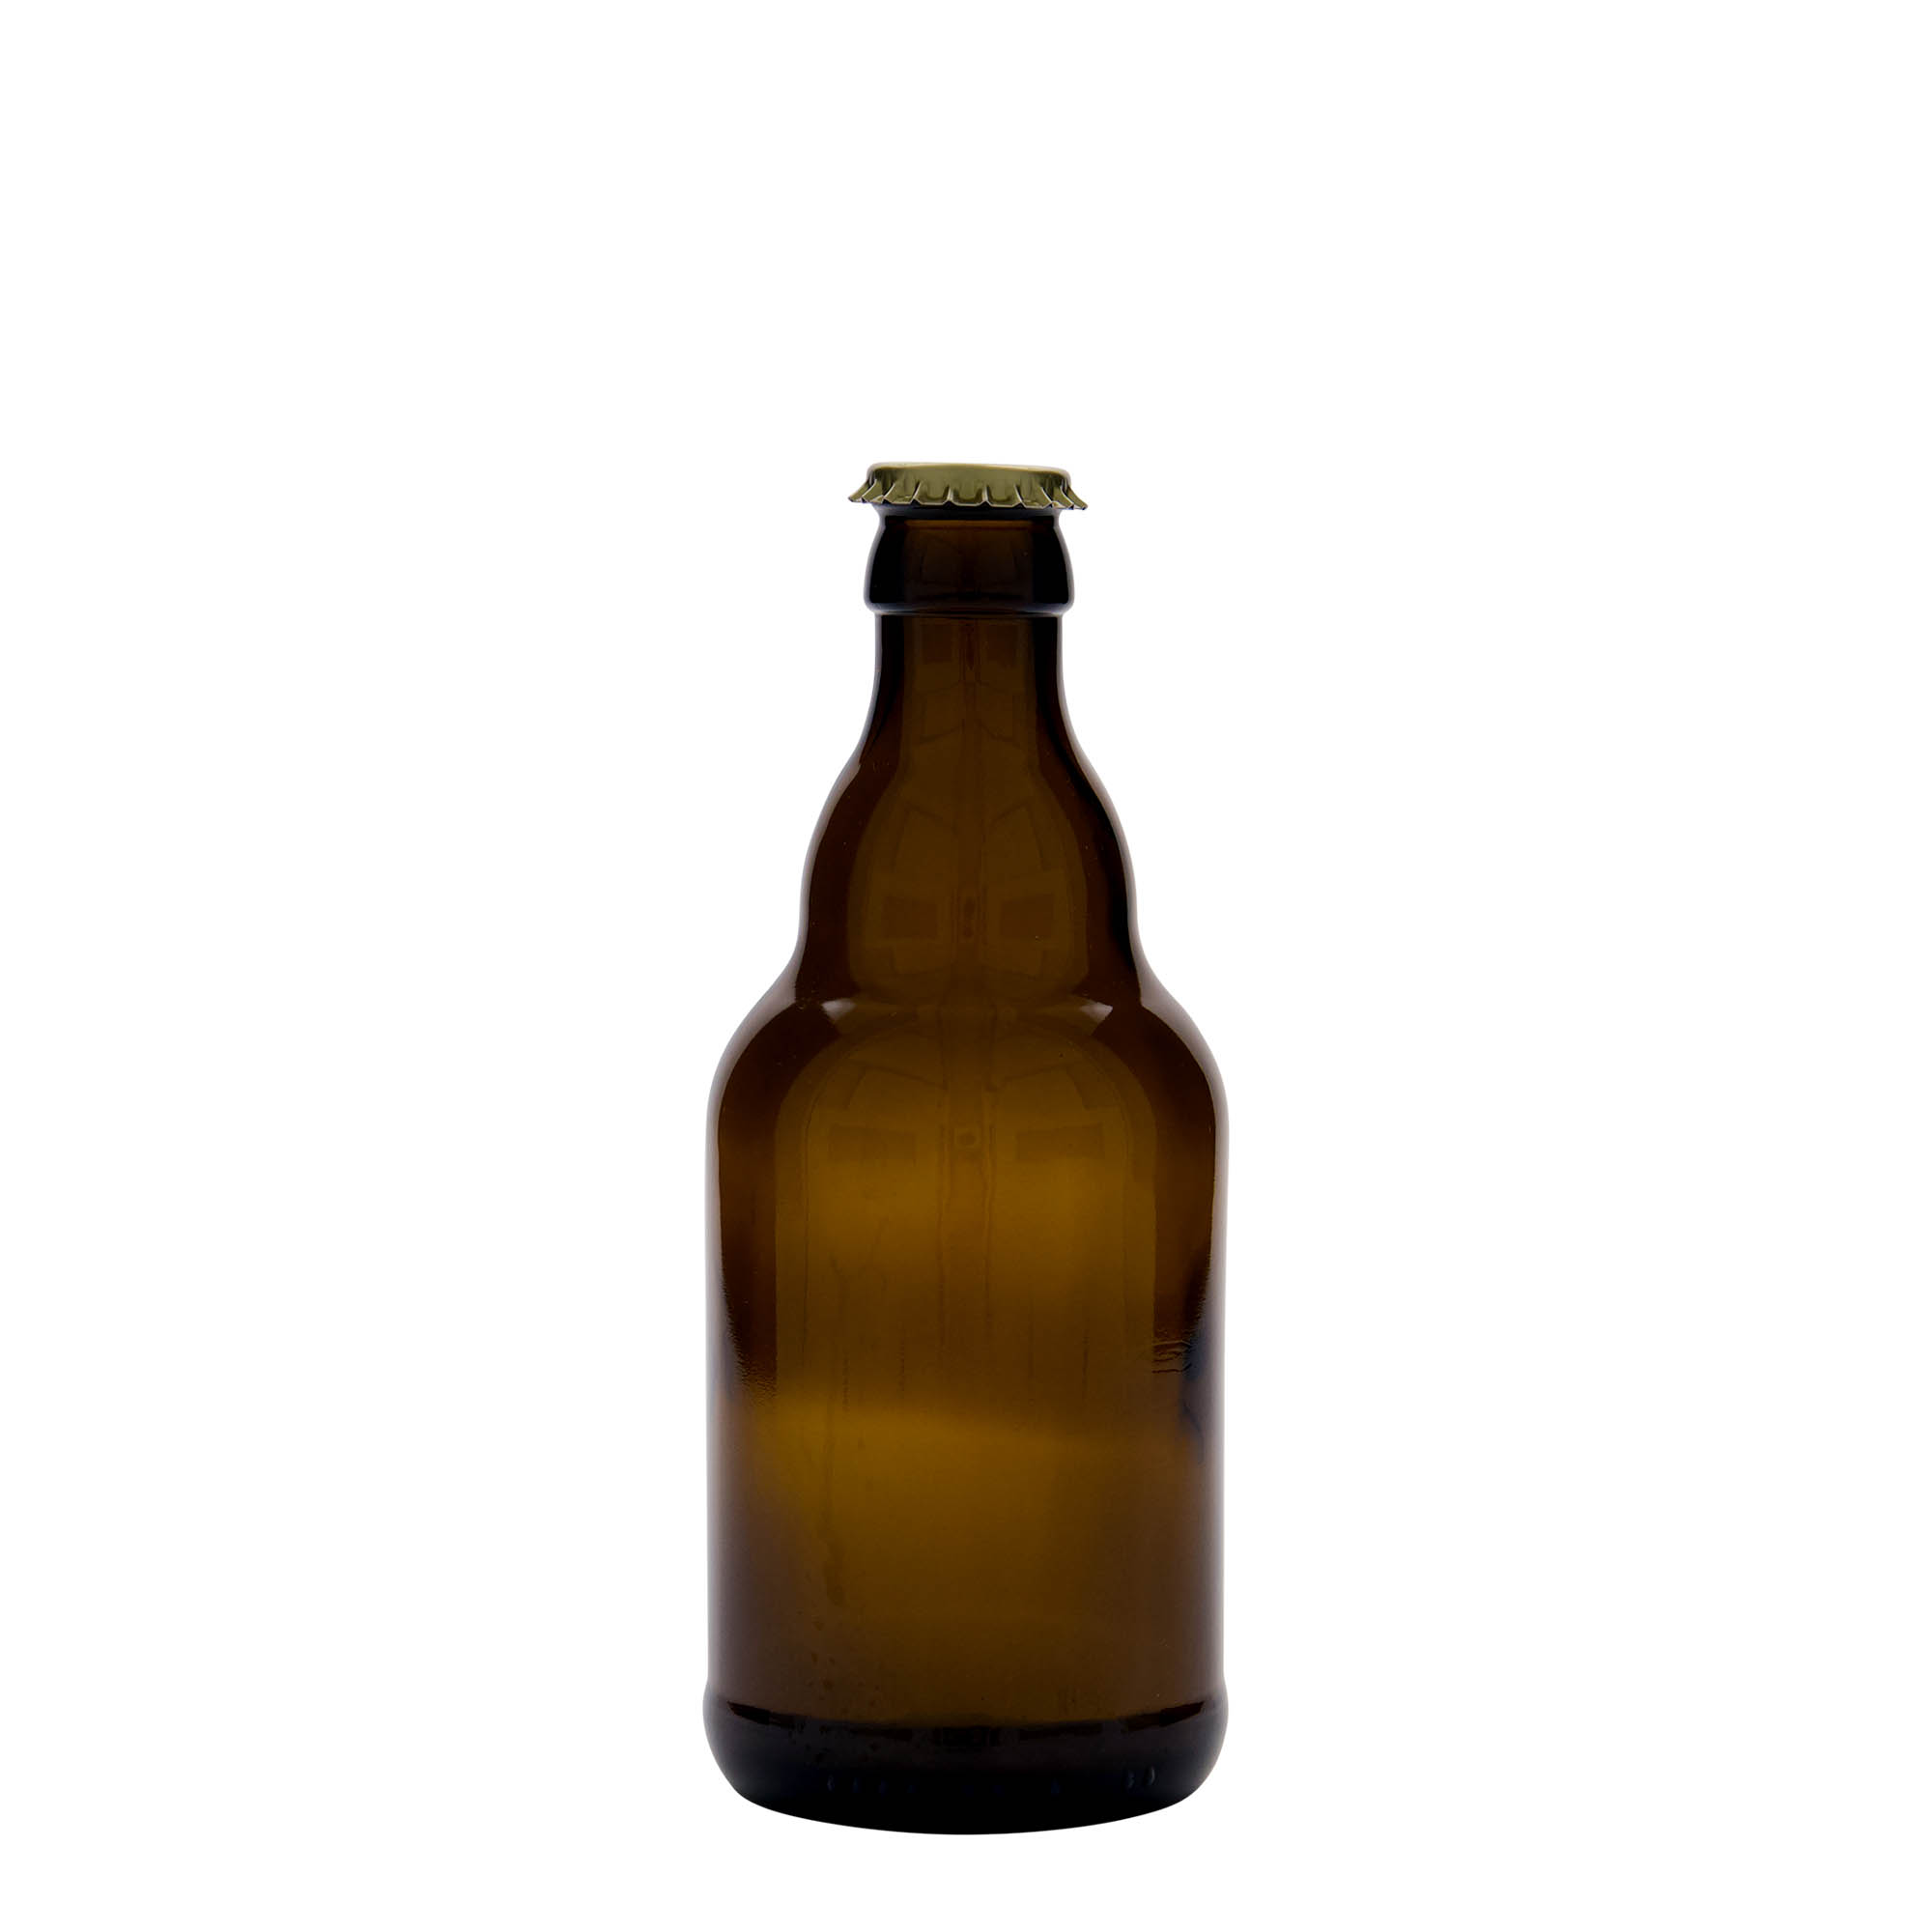 330 ml-es sörösüveg 'Steinie', üveg, barna, szájnyílás: söröskupak